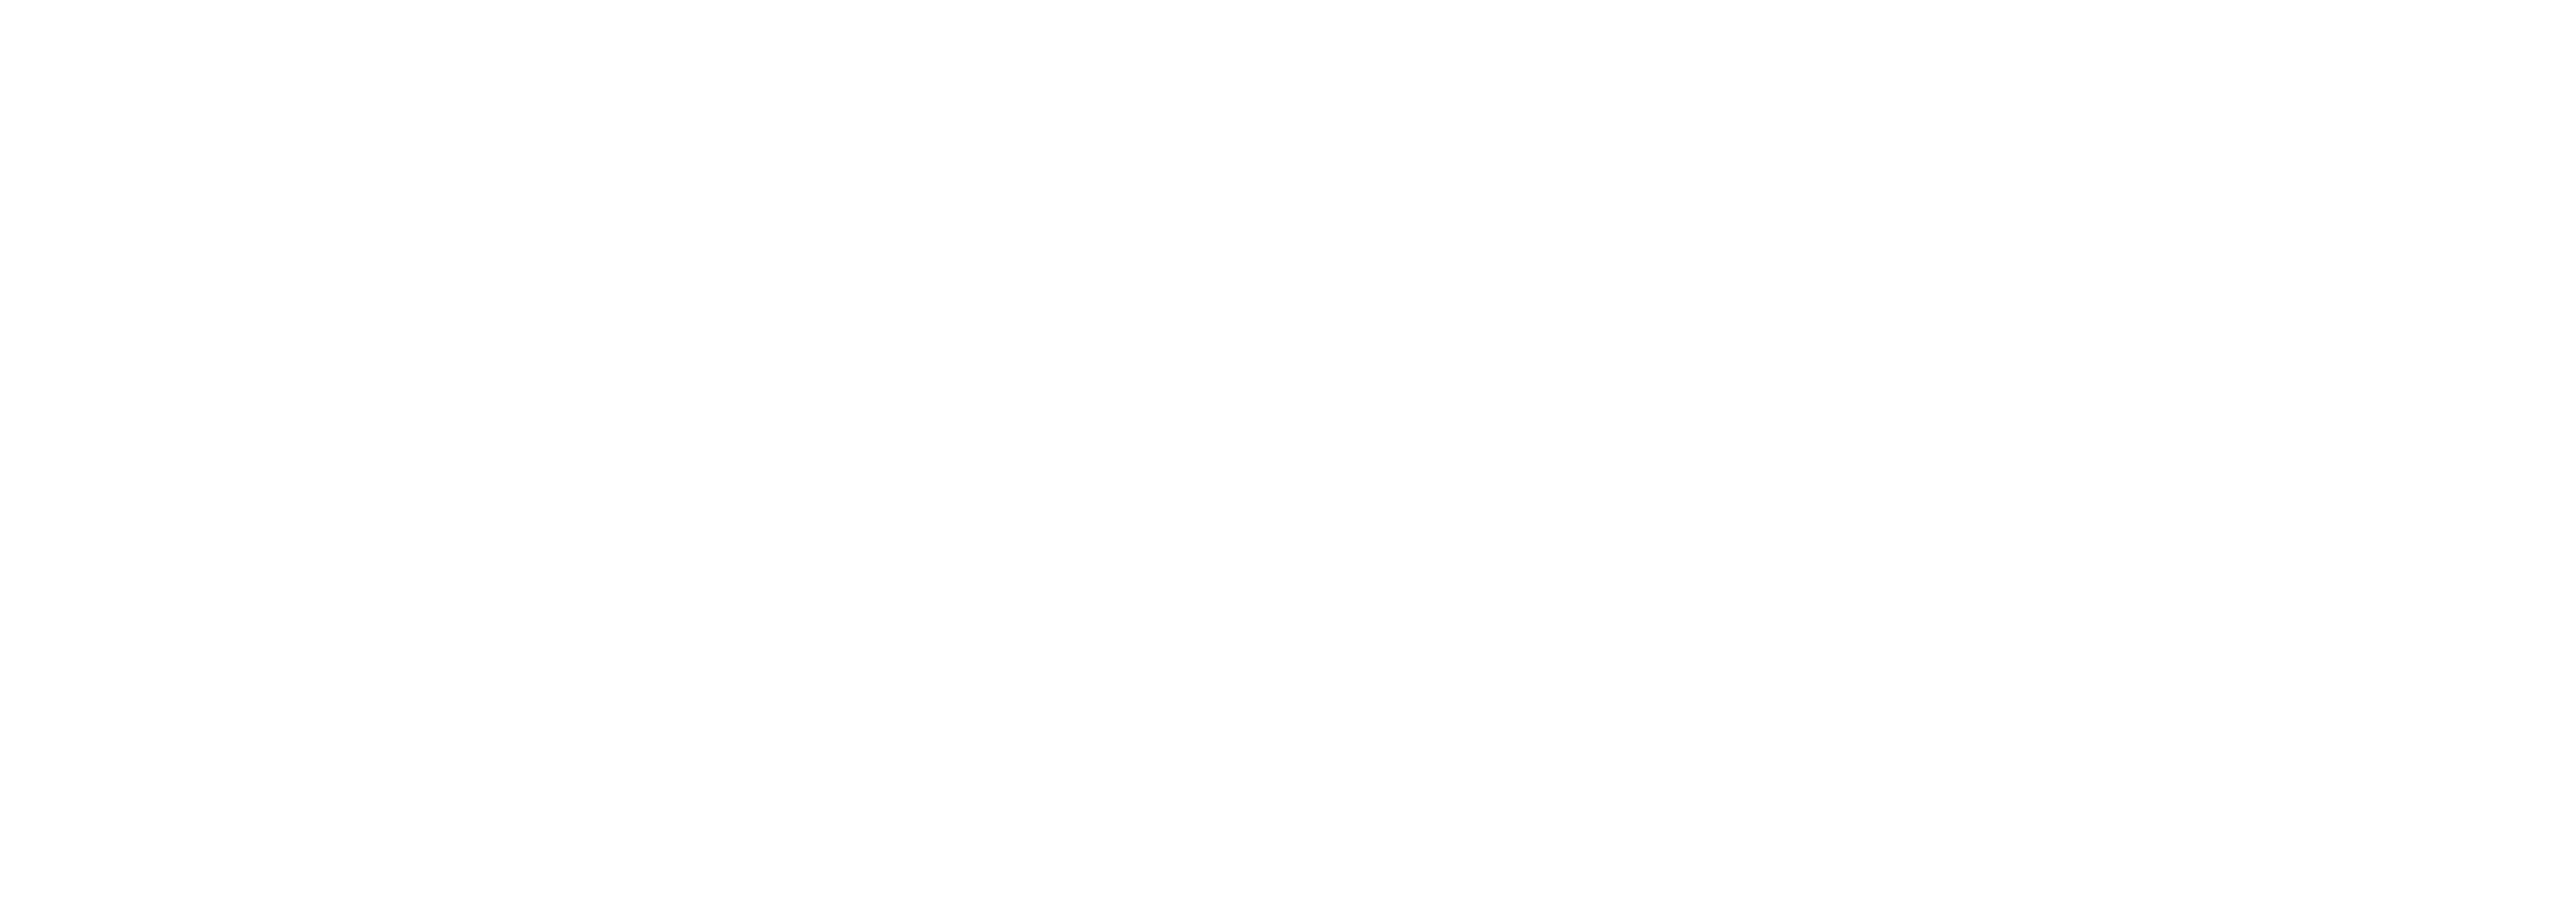 Giftbox